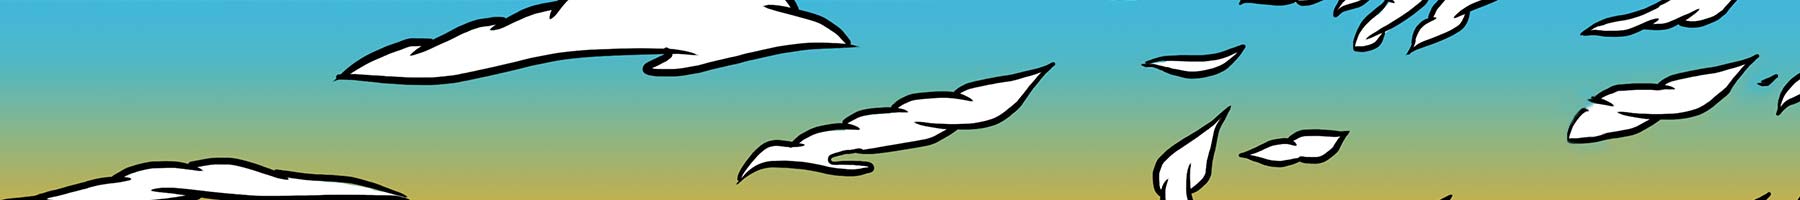 cartoon illustration of clouds